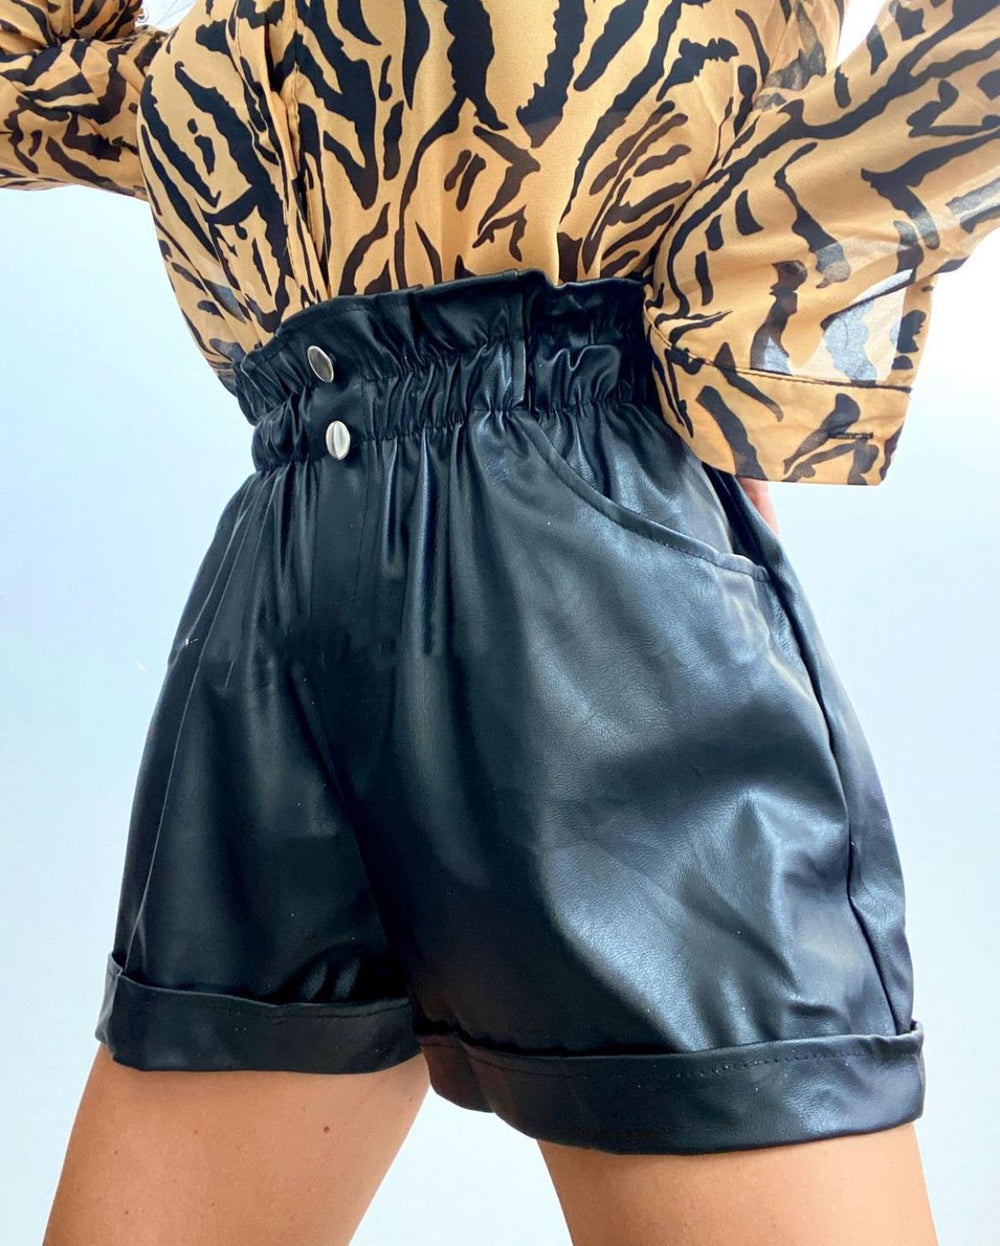 Pantaloncino Donna Shorts Ecopelle Aderente Elastico Casual Elegante  Sensuale